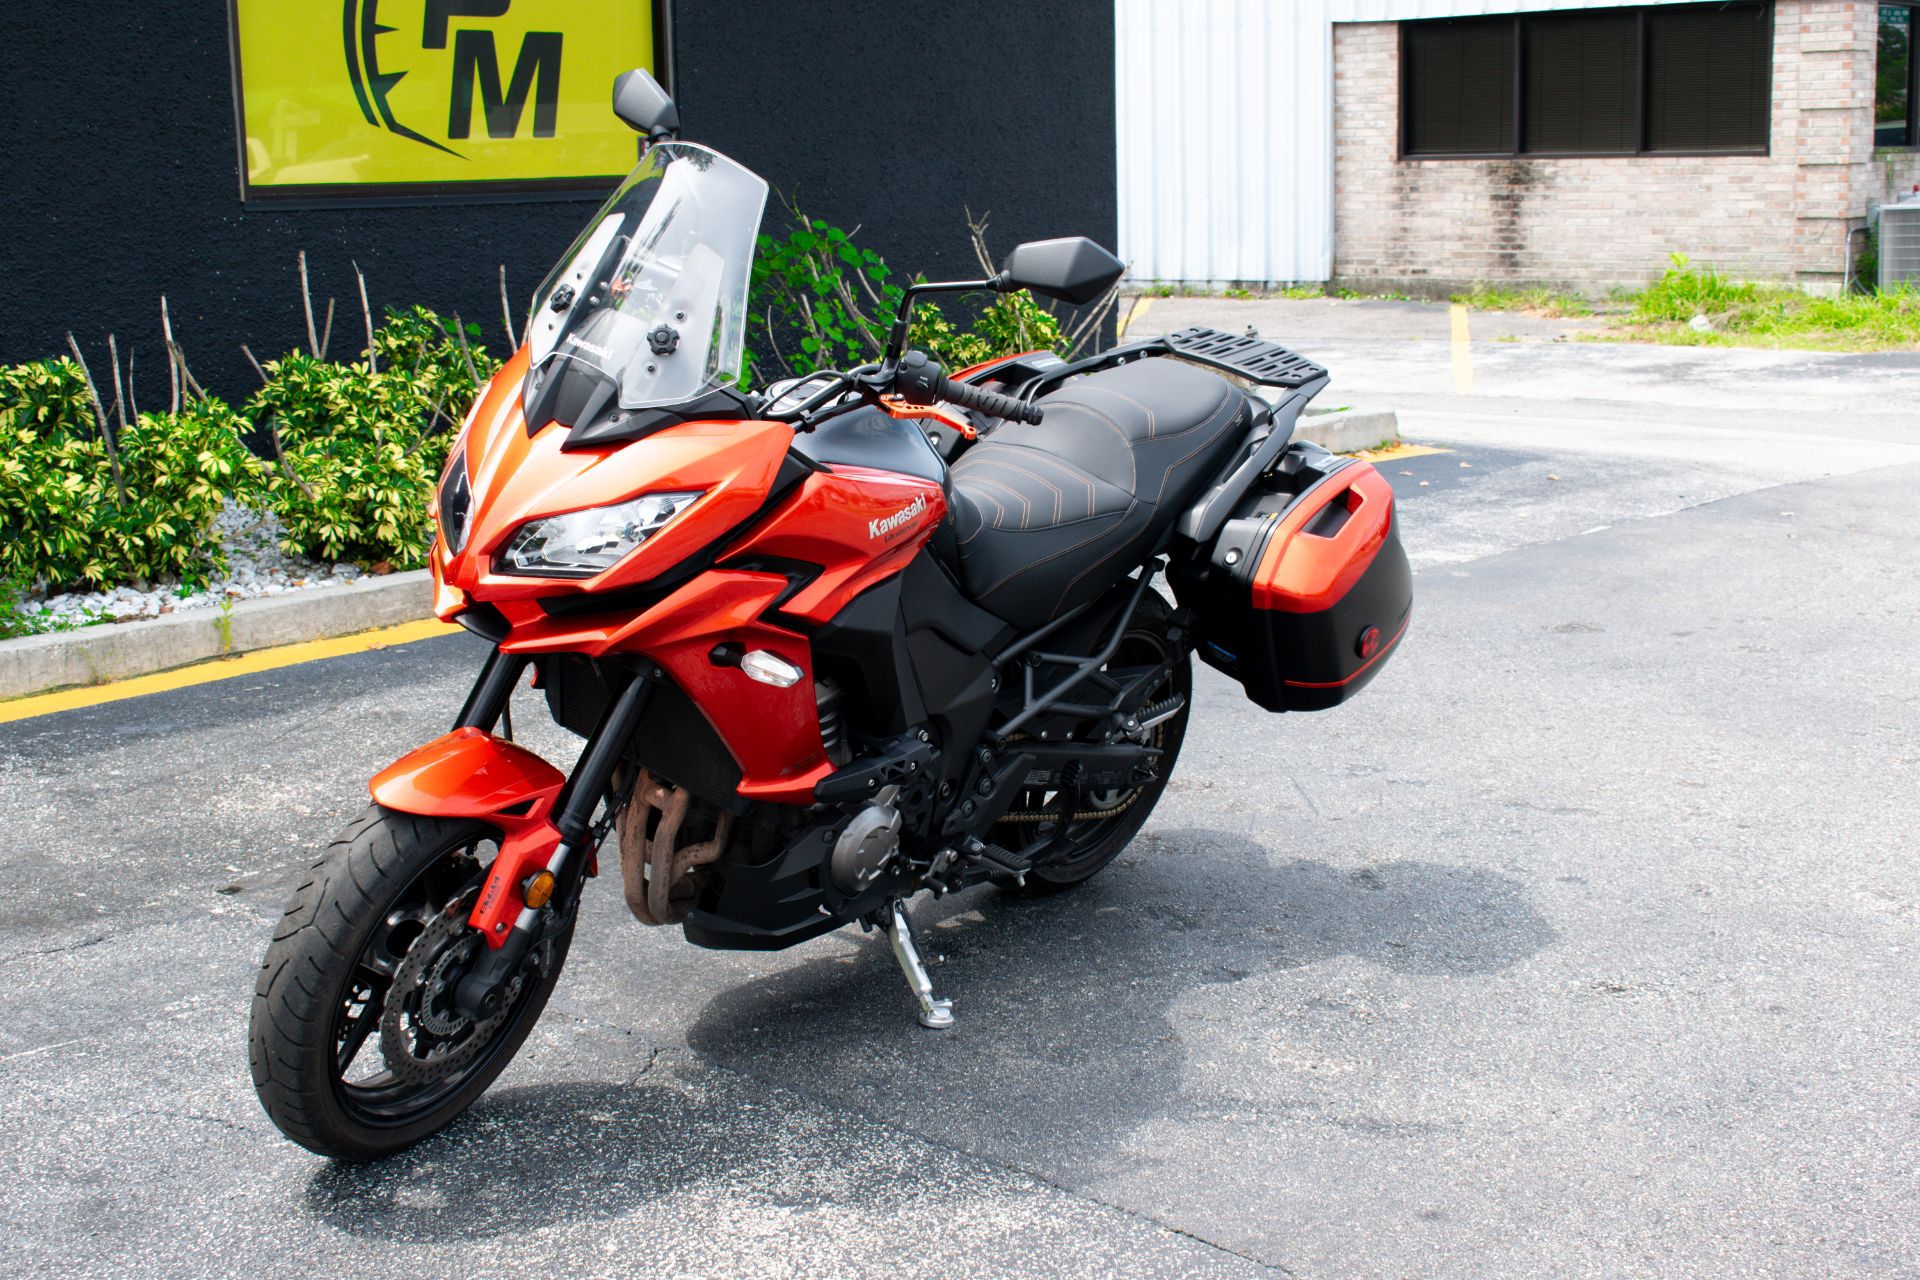 2015 Kawasaki Versys® 1000 LT in Jacksonville, Florida - Photo 15